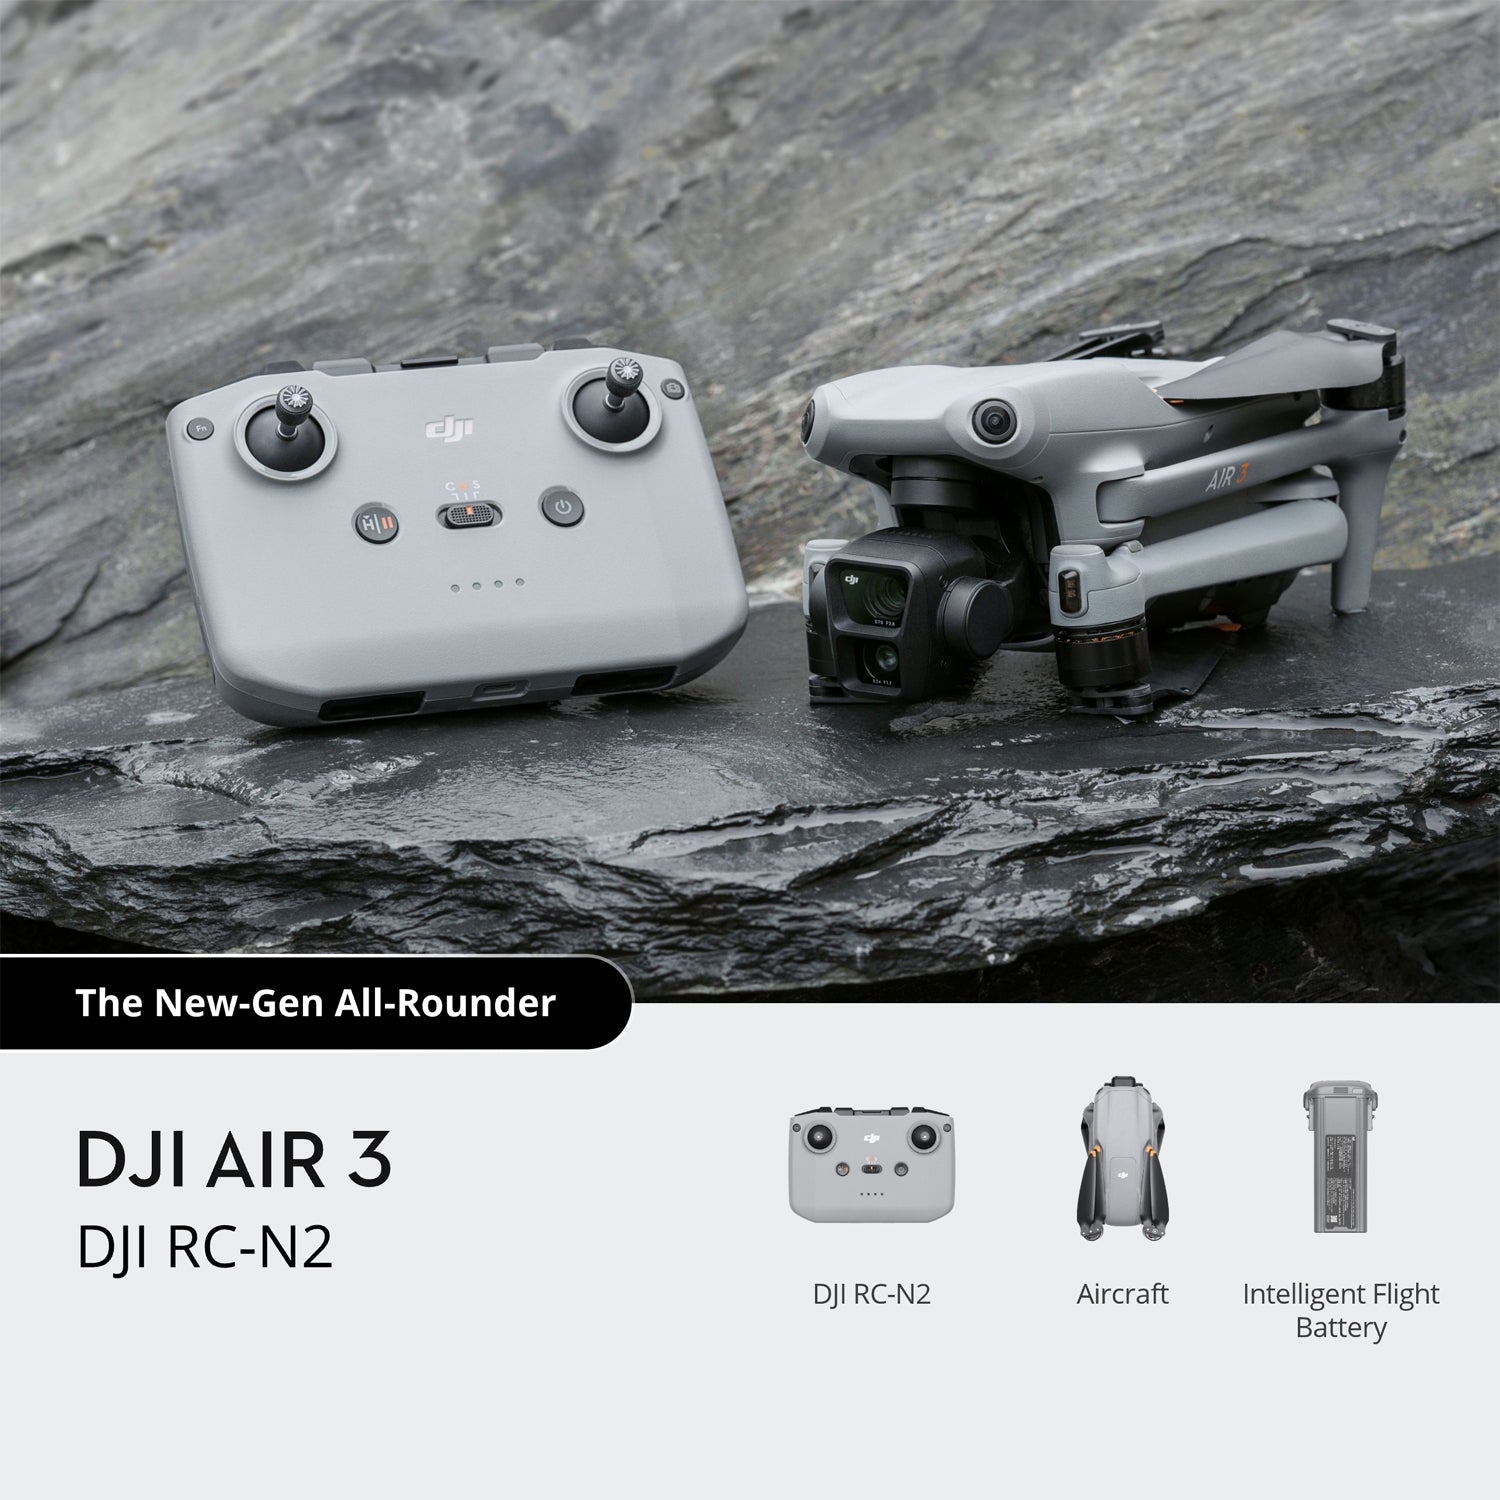 DJI Air 3 - Medium Tele and Wide Angle Dual Primary Cameras